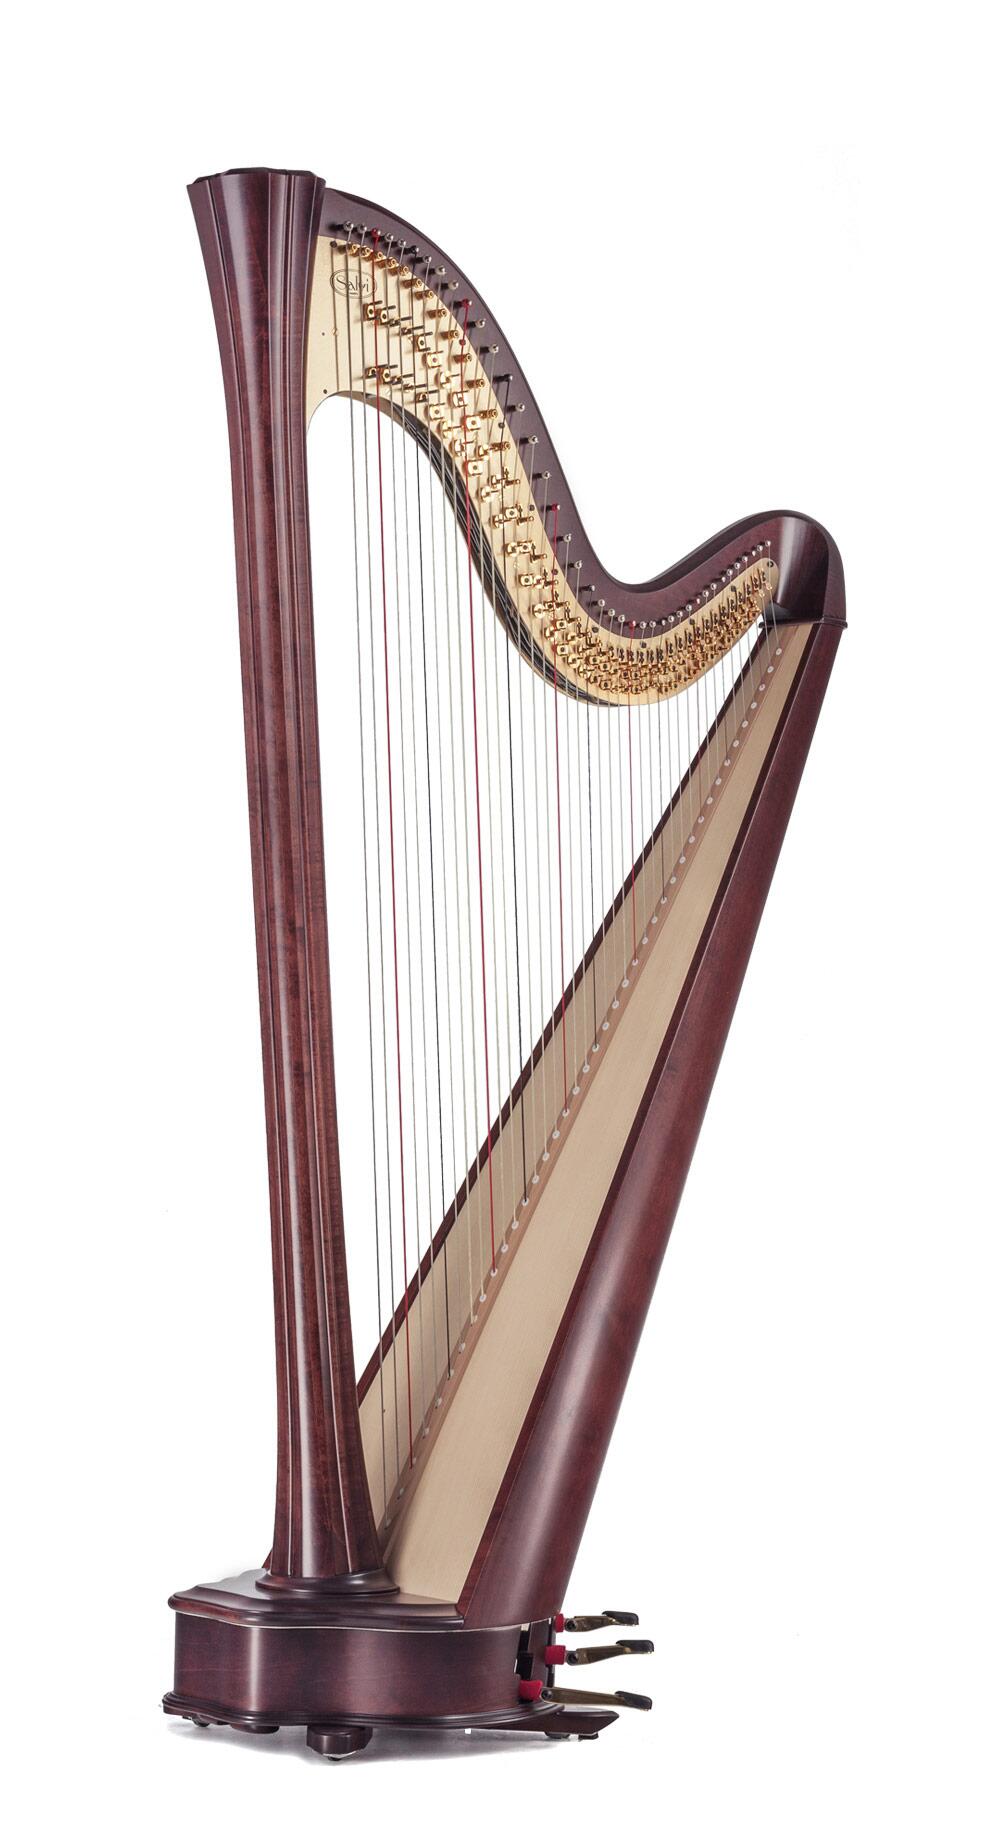 Salvi Daphne 40 strings mahogany gut strings : photo 1